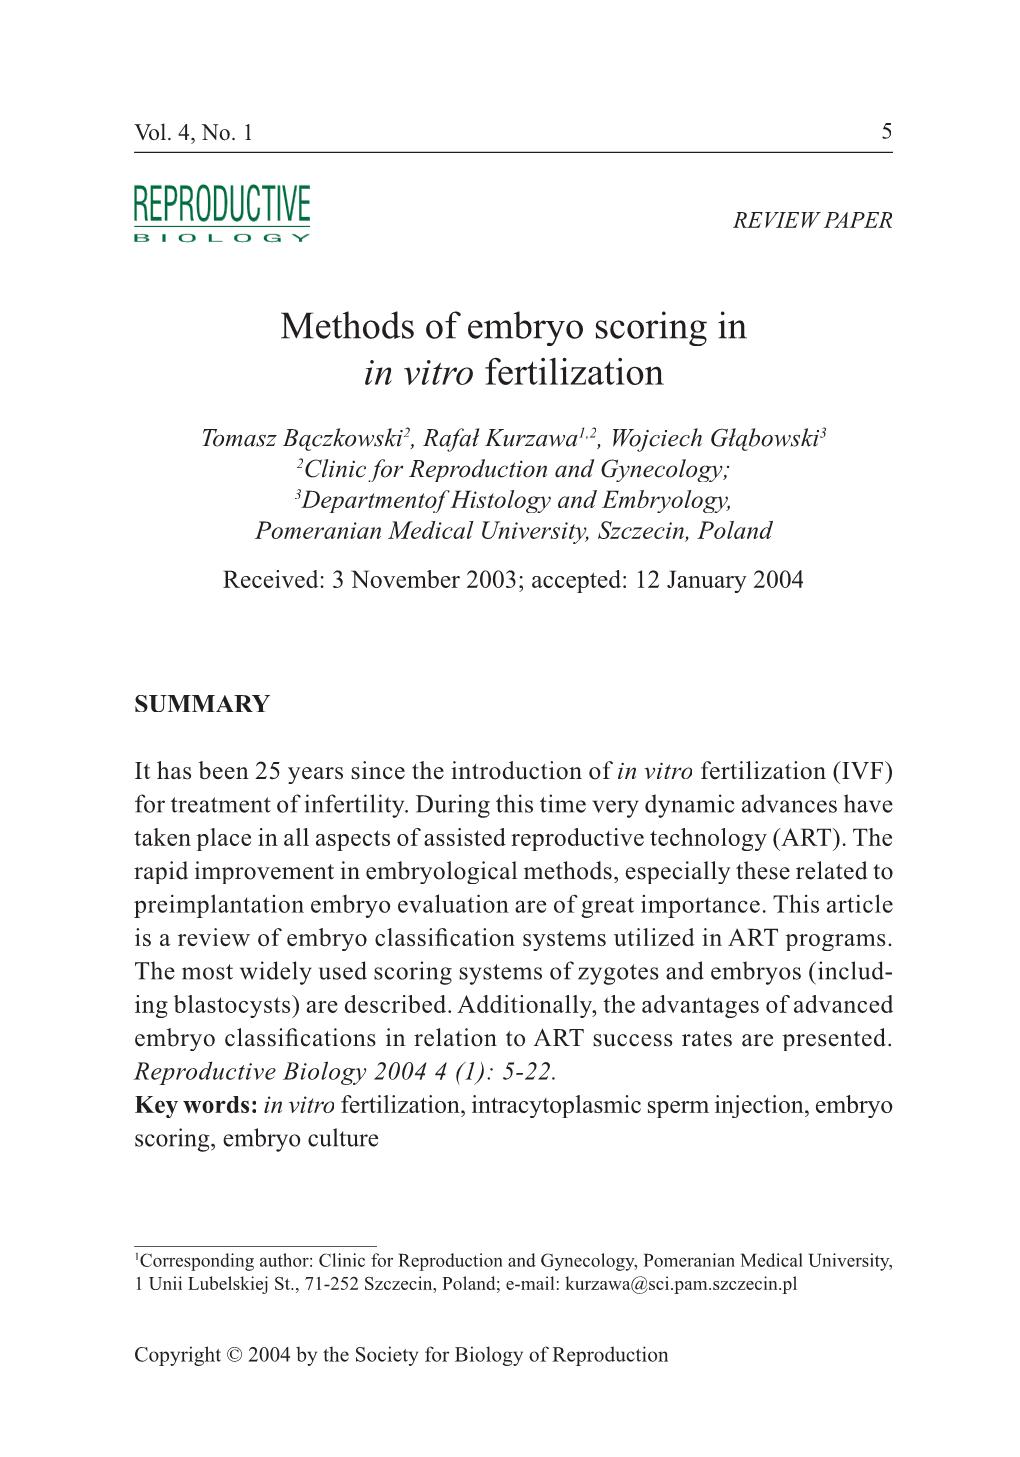 Methods of Embryo Scoring in in Vitro Fertilization